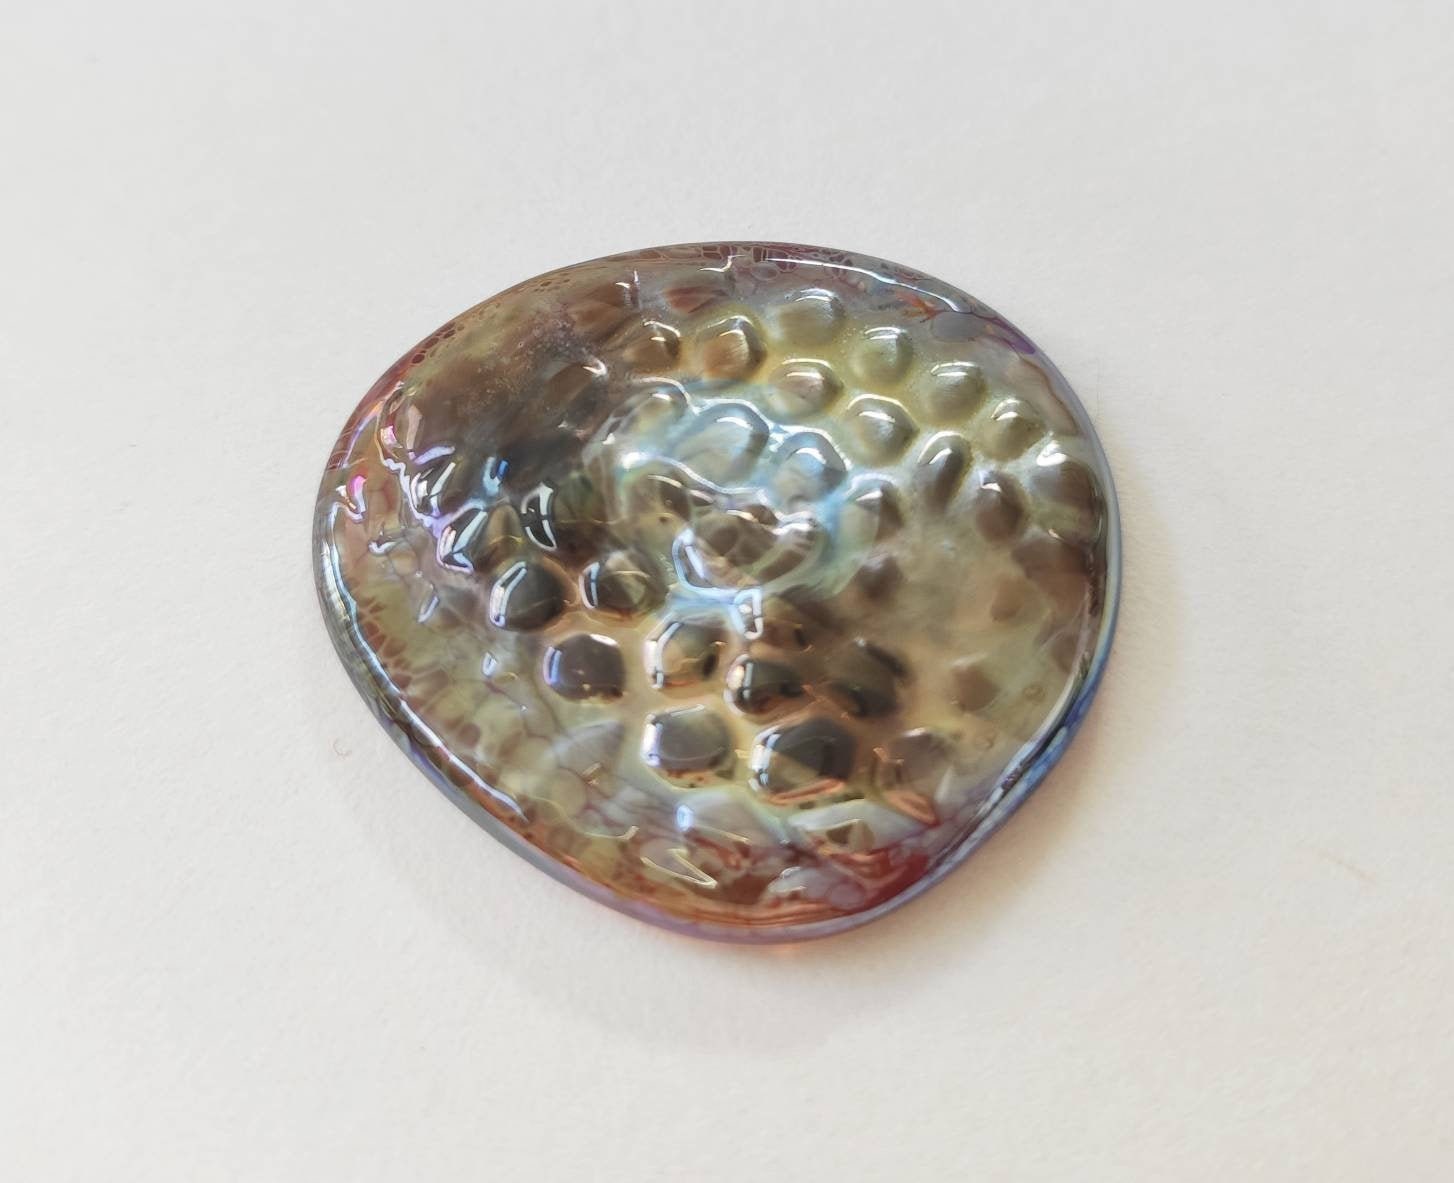 Glass Seed Round Beads 11/0 Metallic Olive Iris Seed Beads 